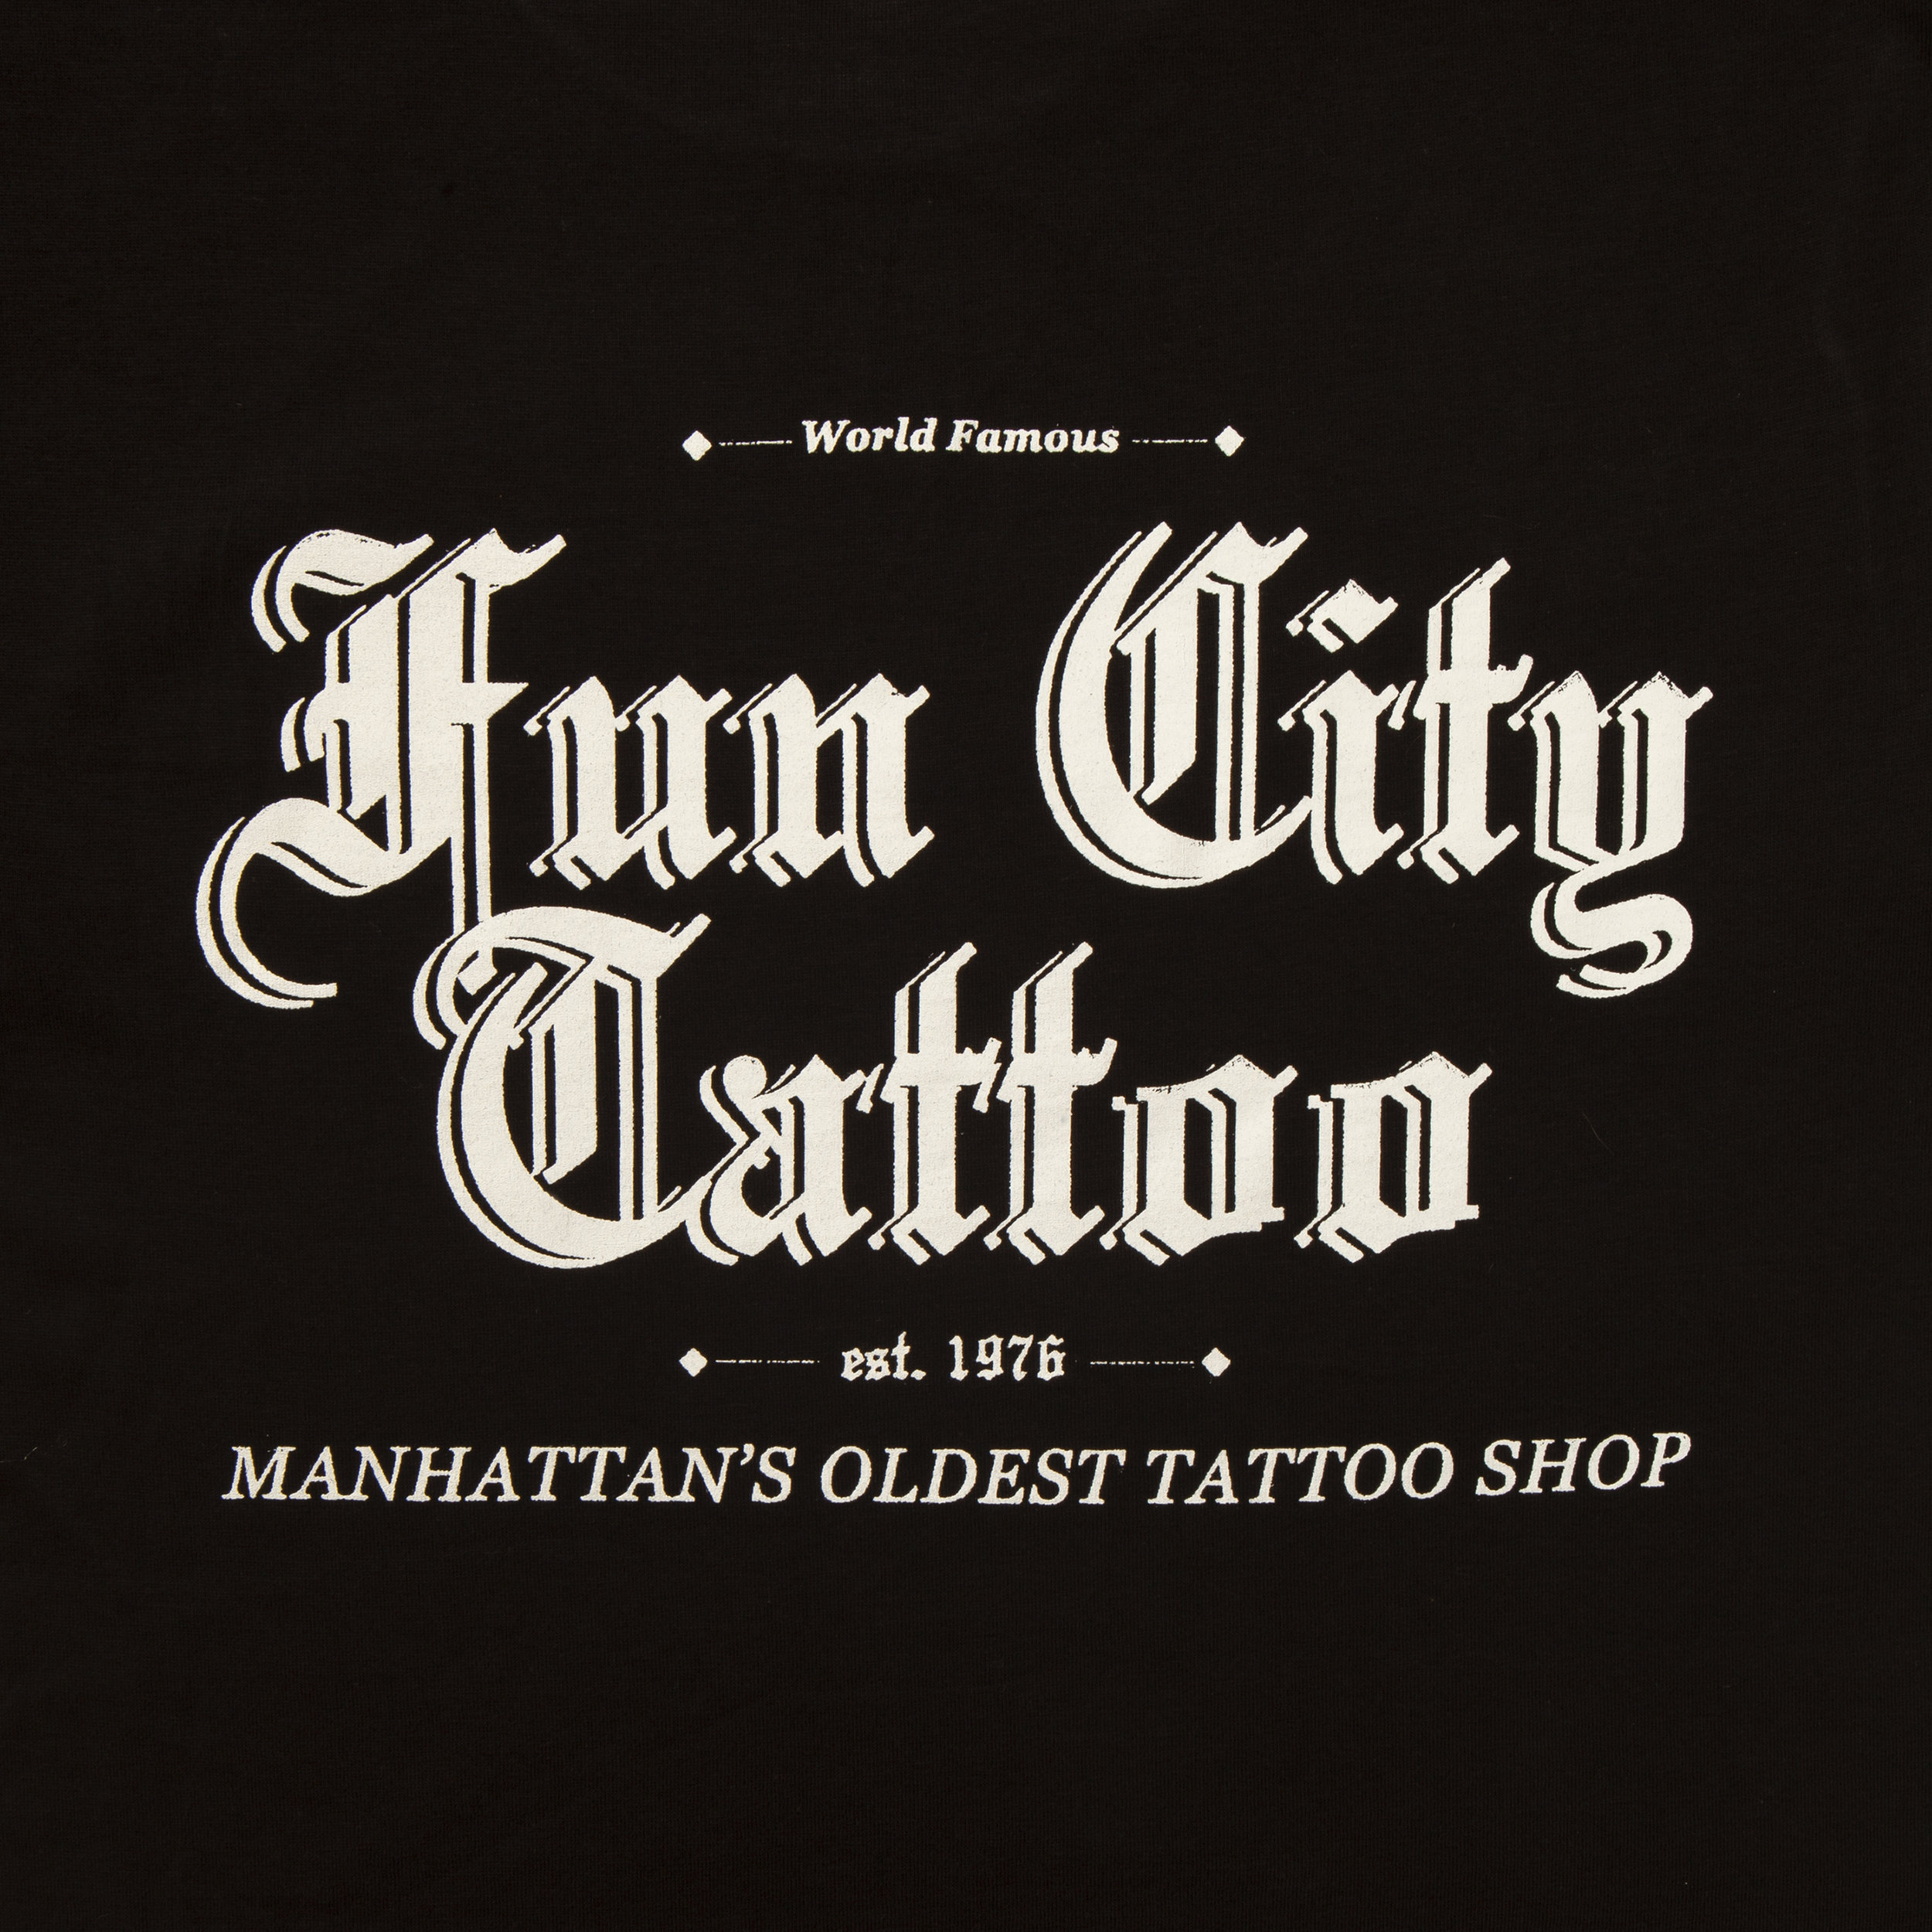 Jersey City Tattoo Co